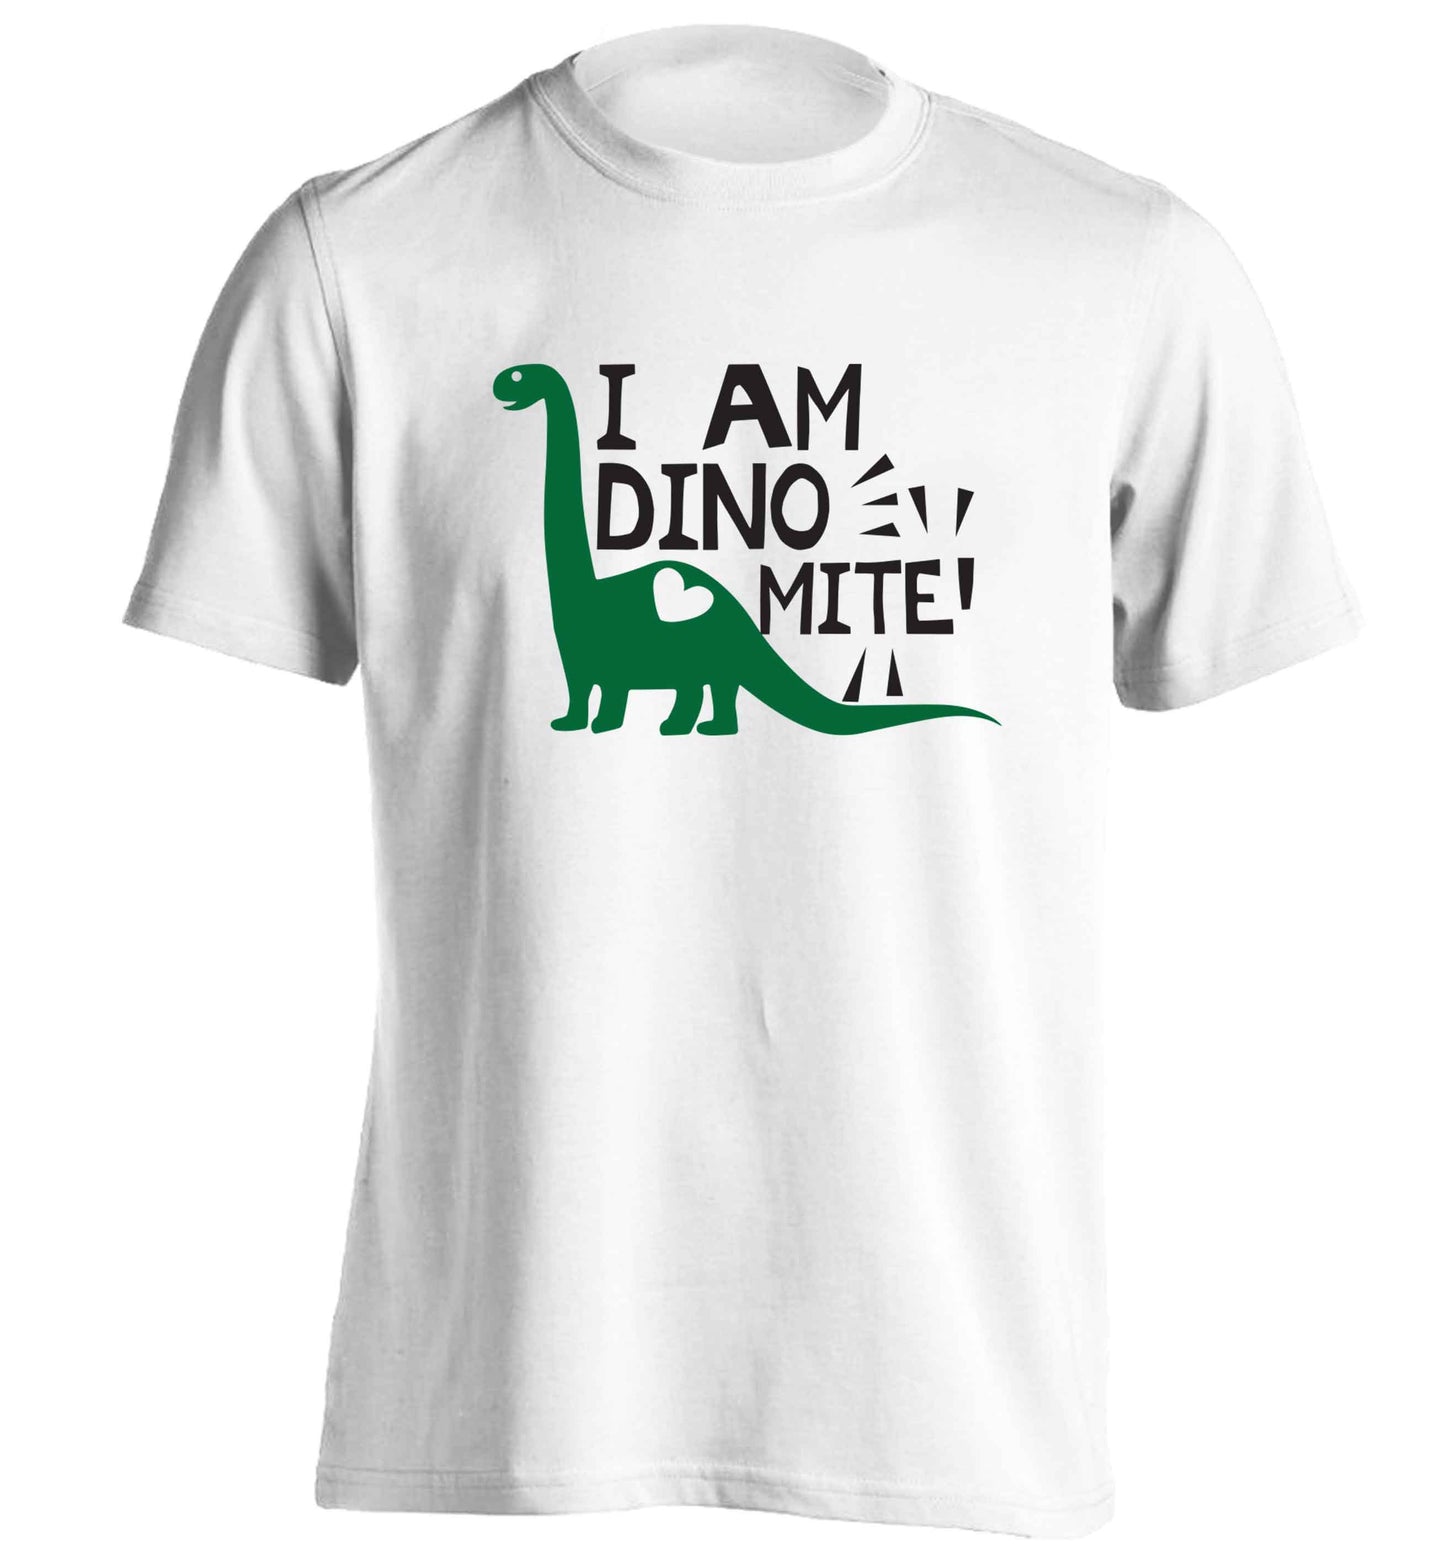 I am dinomite! adults unisex white Tshirt 2XL